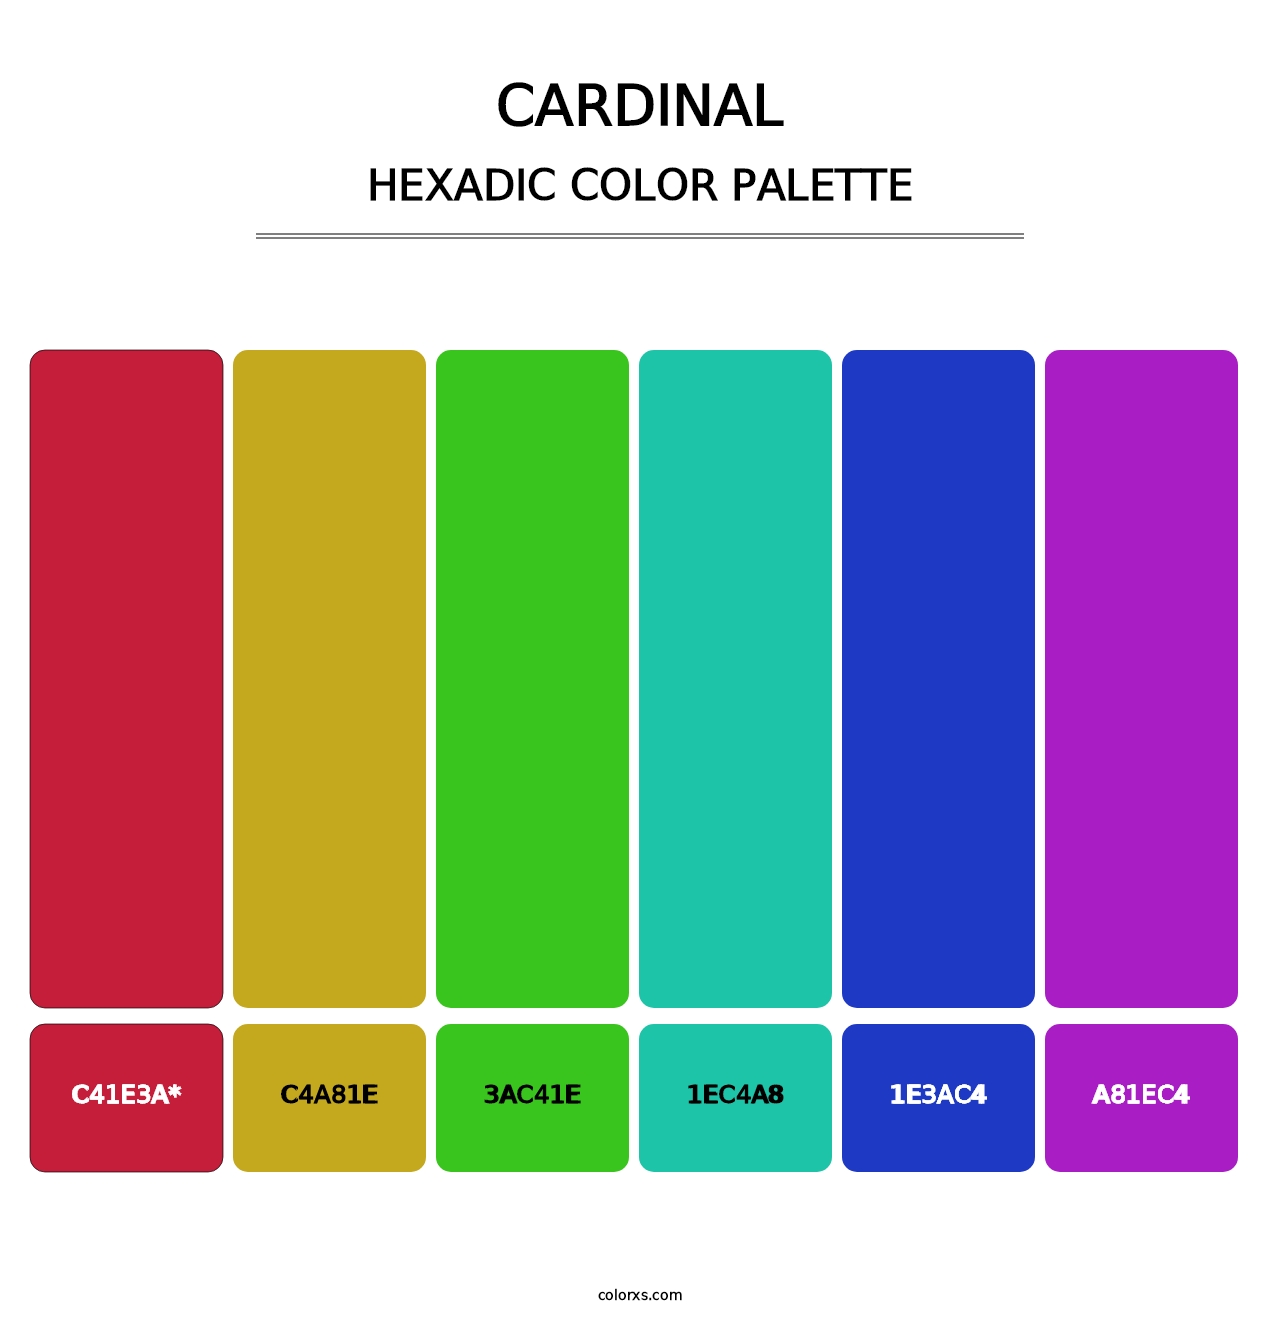 Cardinal - Hexadic Color Palette